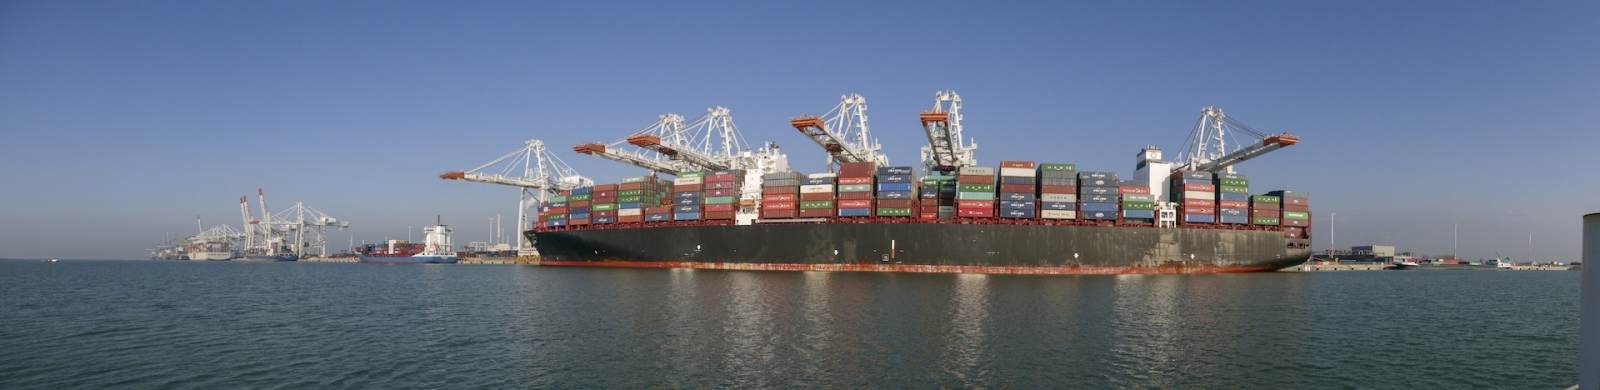 cargo-citerne au port du Havre pour mise en ligne